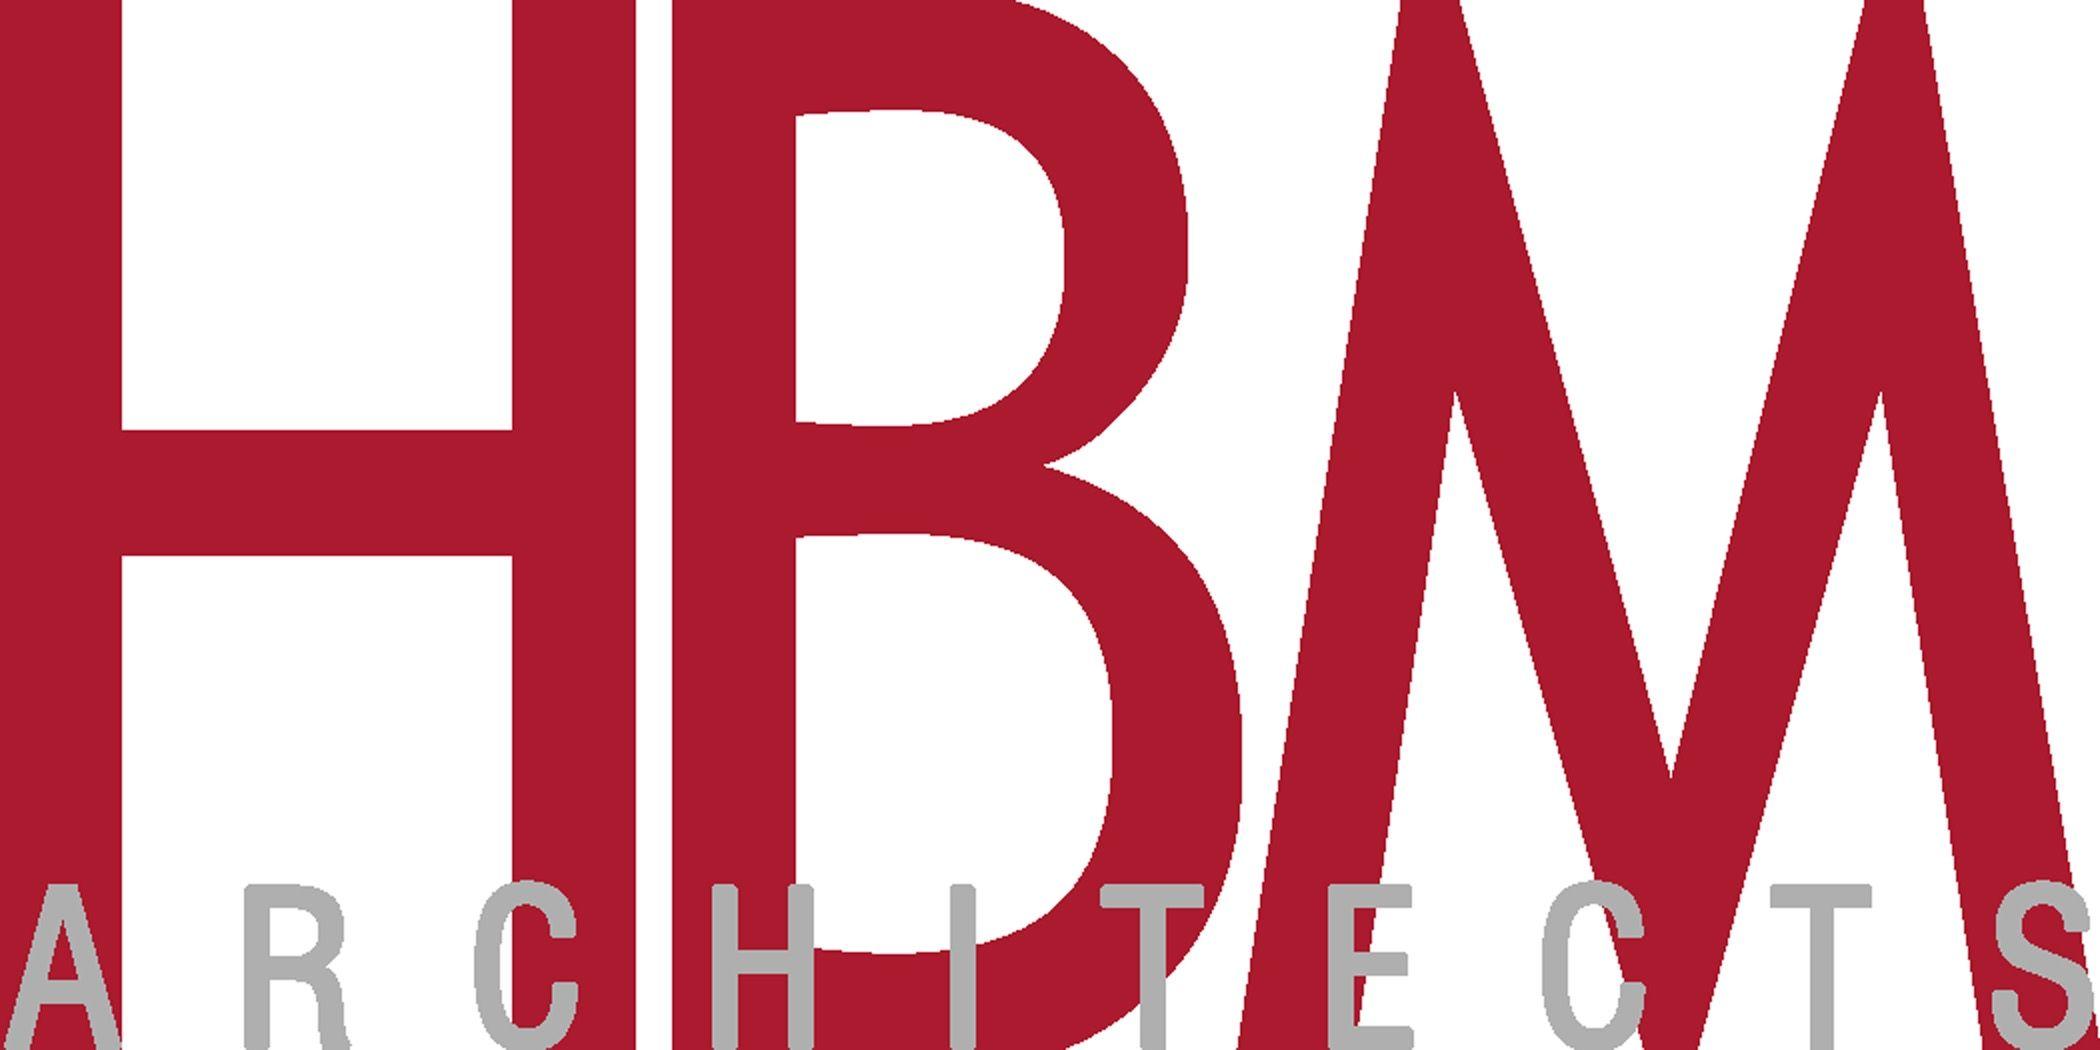 HBM Logo - HBM Logo Library Council